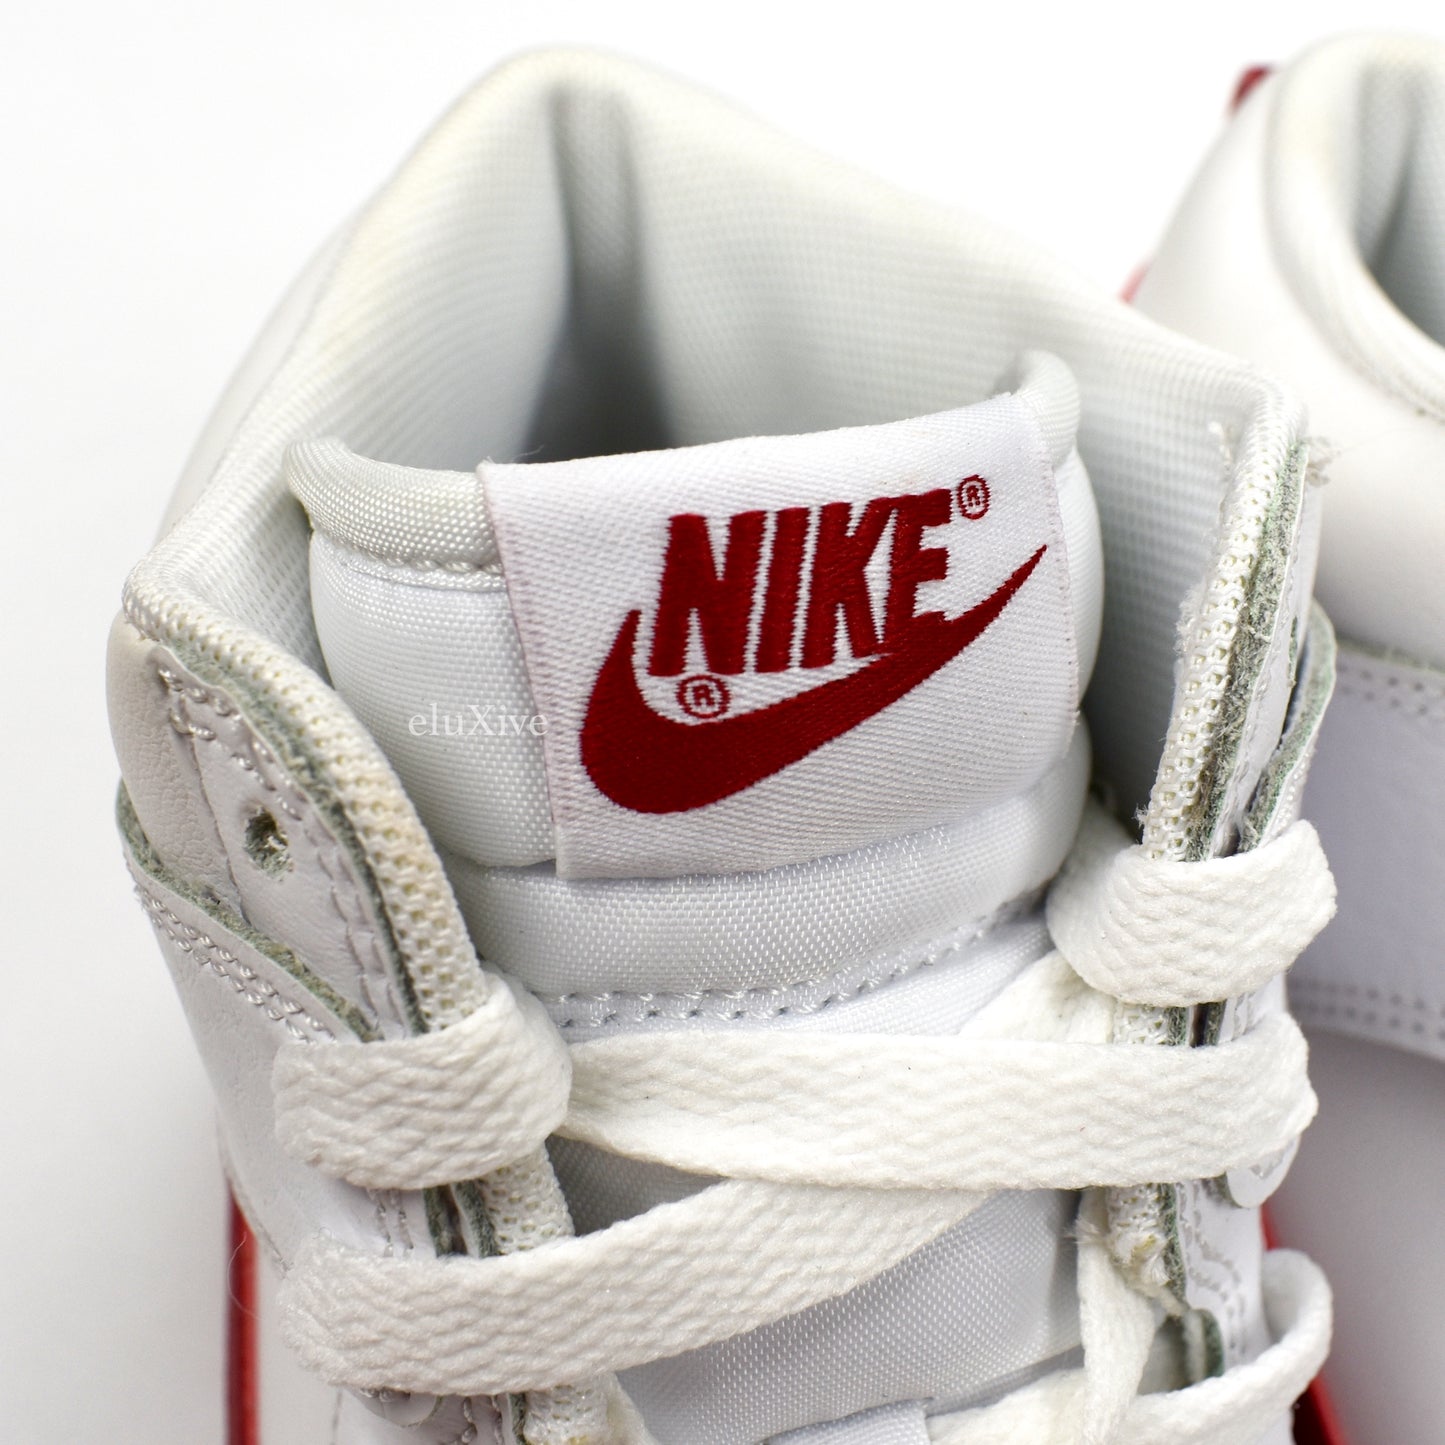 Nike - Dunk High (White/Gym Red)